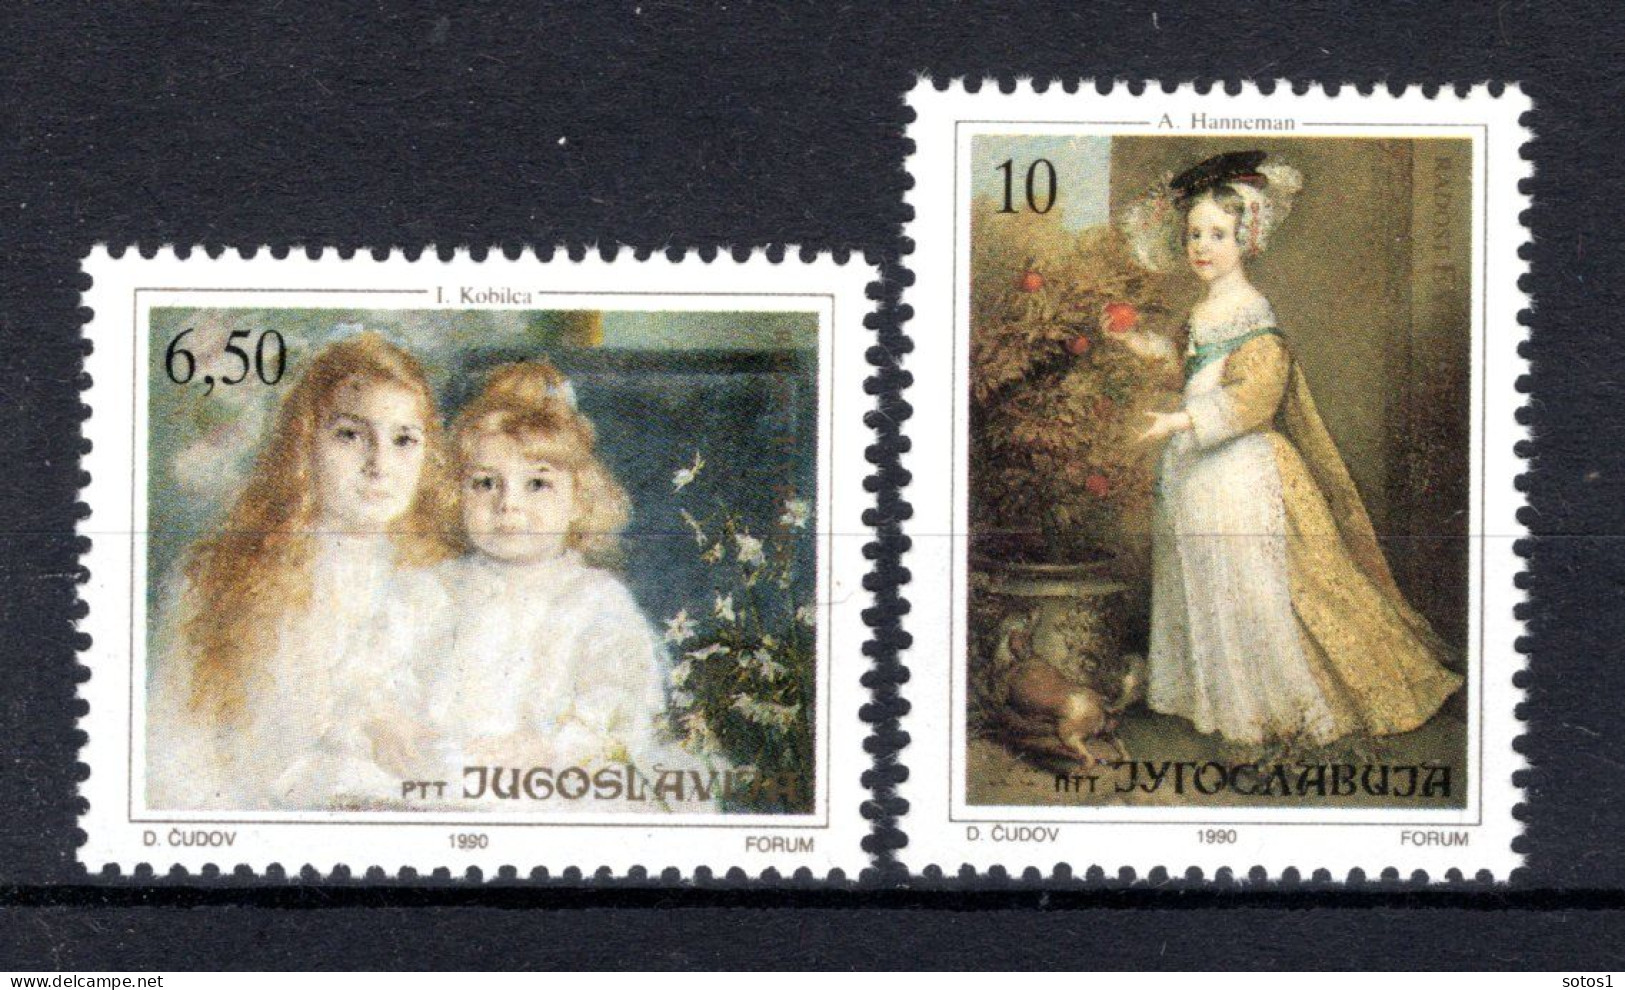 JOEGOSLAVIE Yt. 2310/2311 MNH 1990 - Unused Stamps